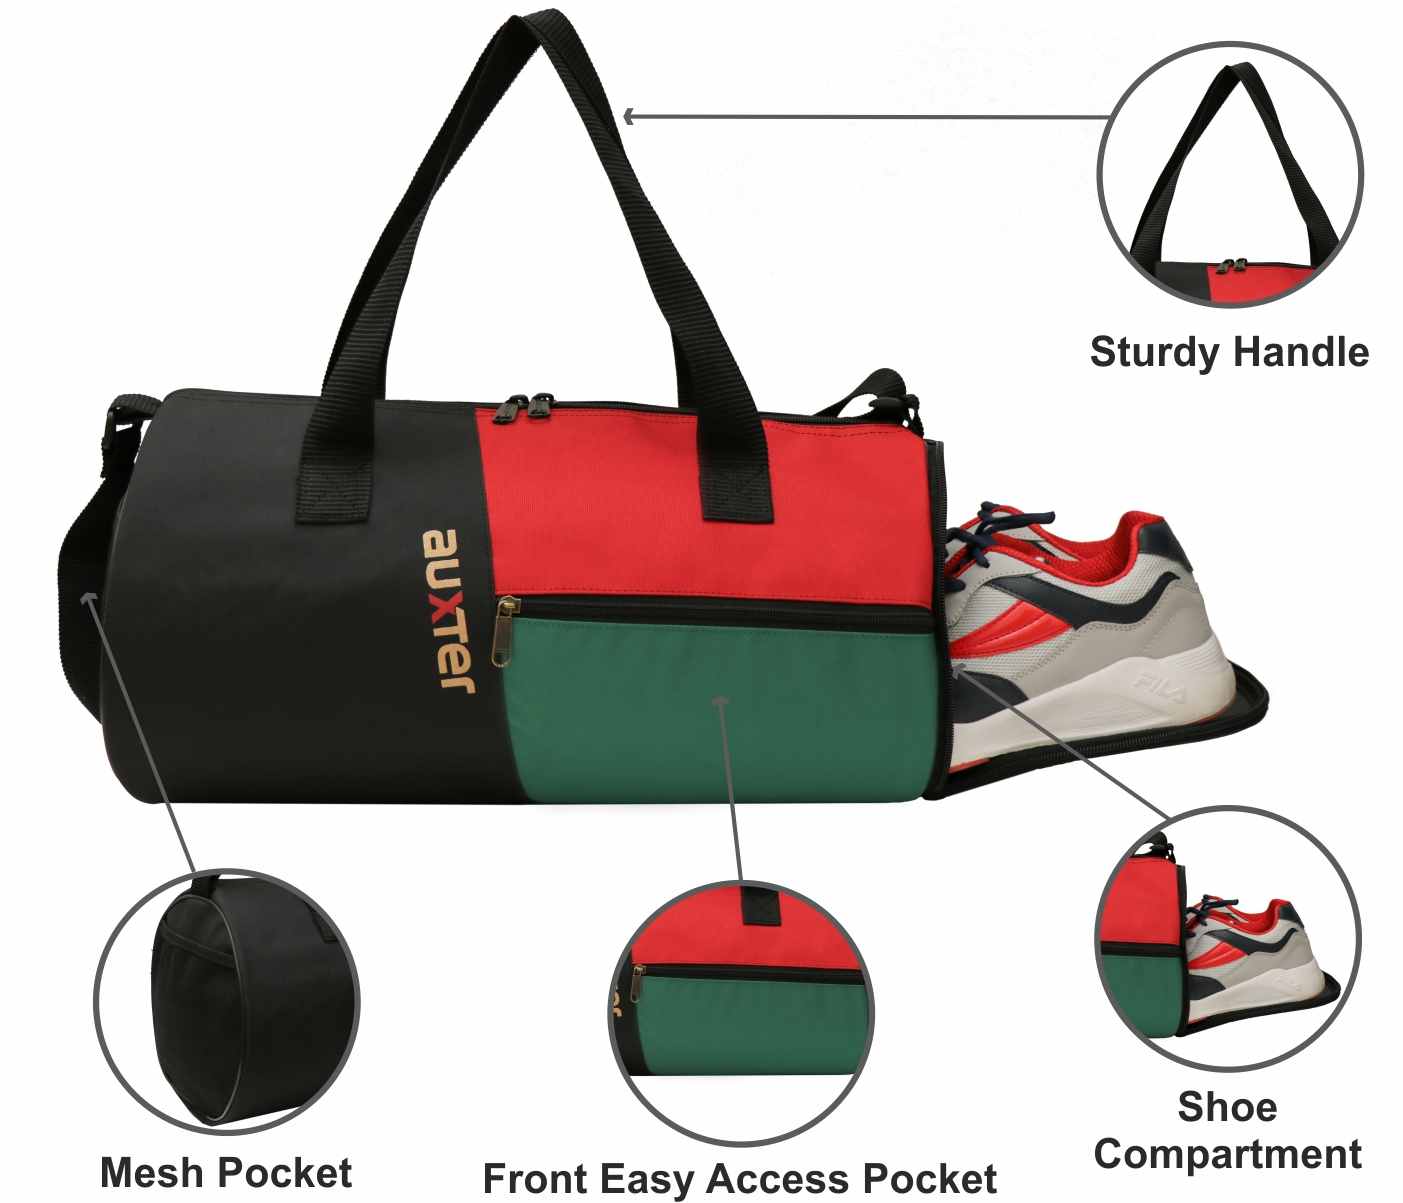 Auxter Premium Black / Green Sports Duffel Gym Bag with Shoe Compartment